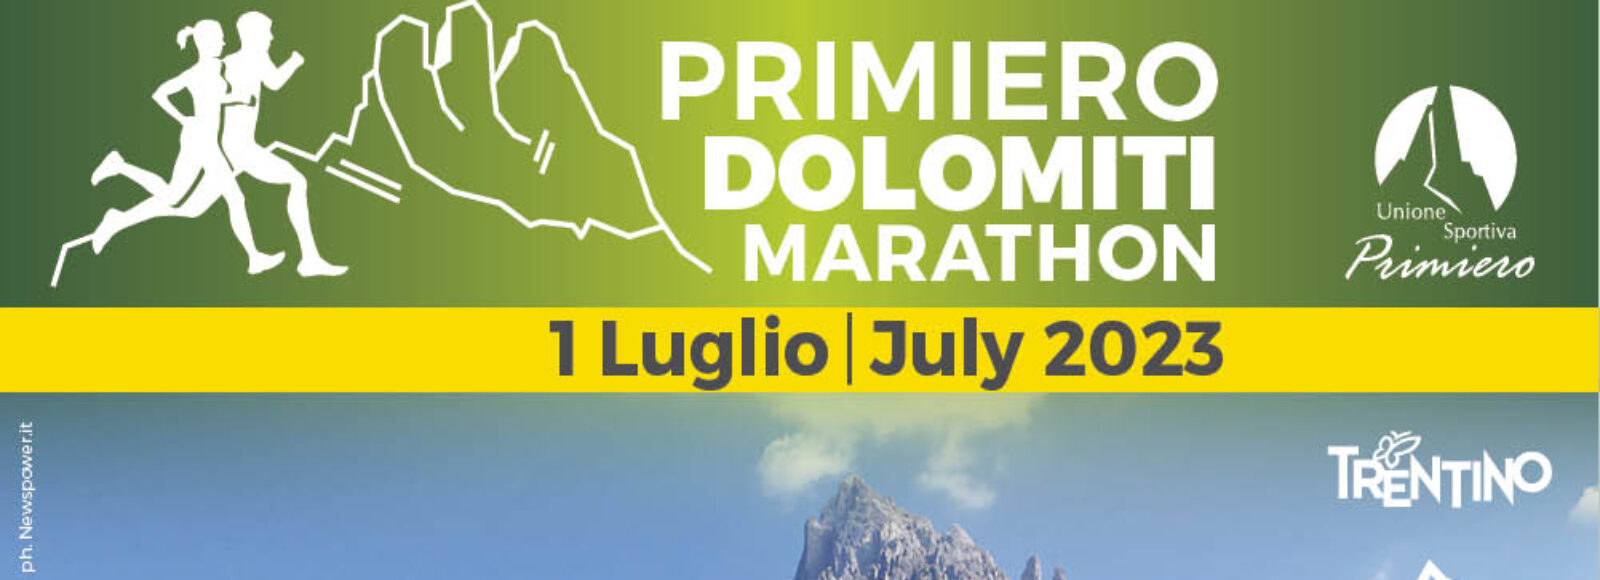 Marathona Dolomiti 2023